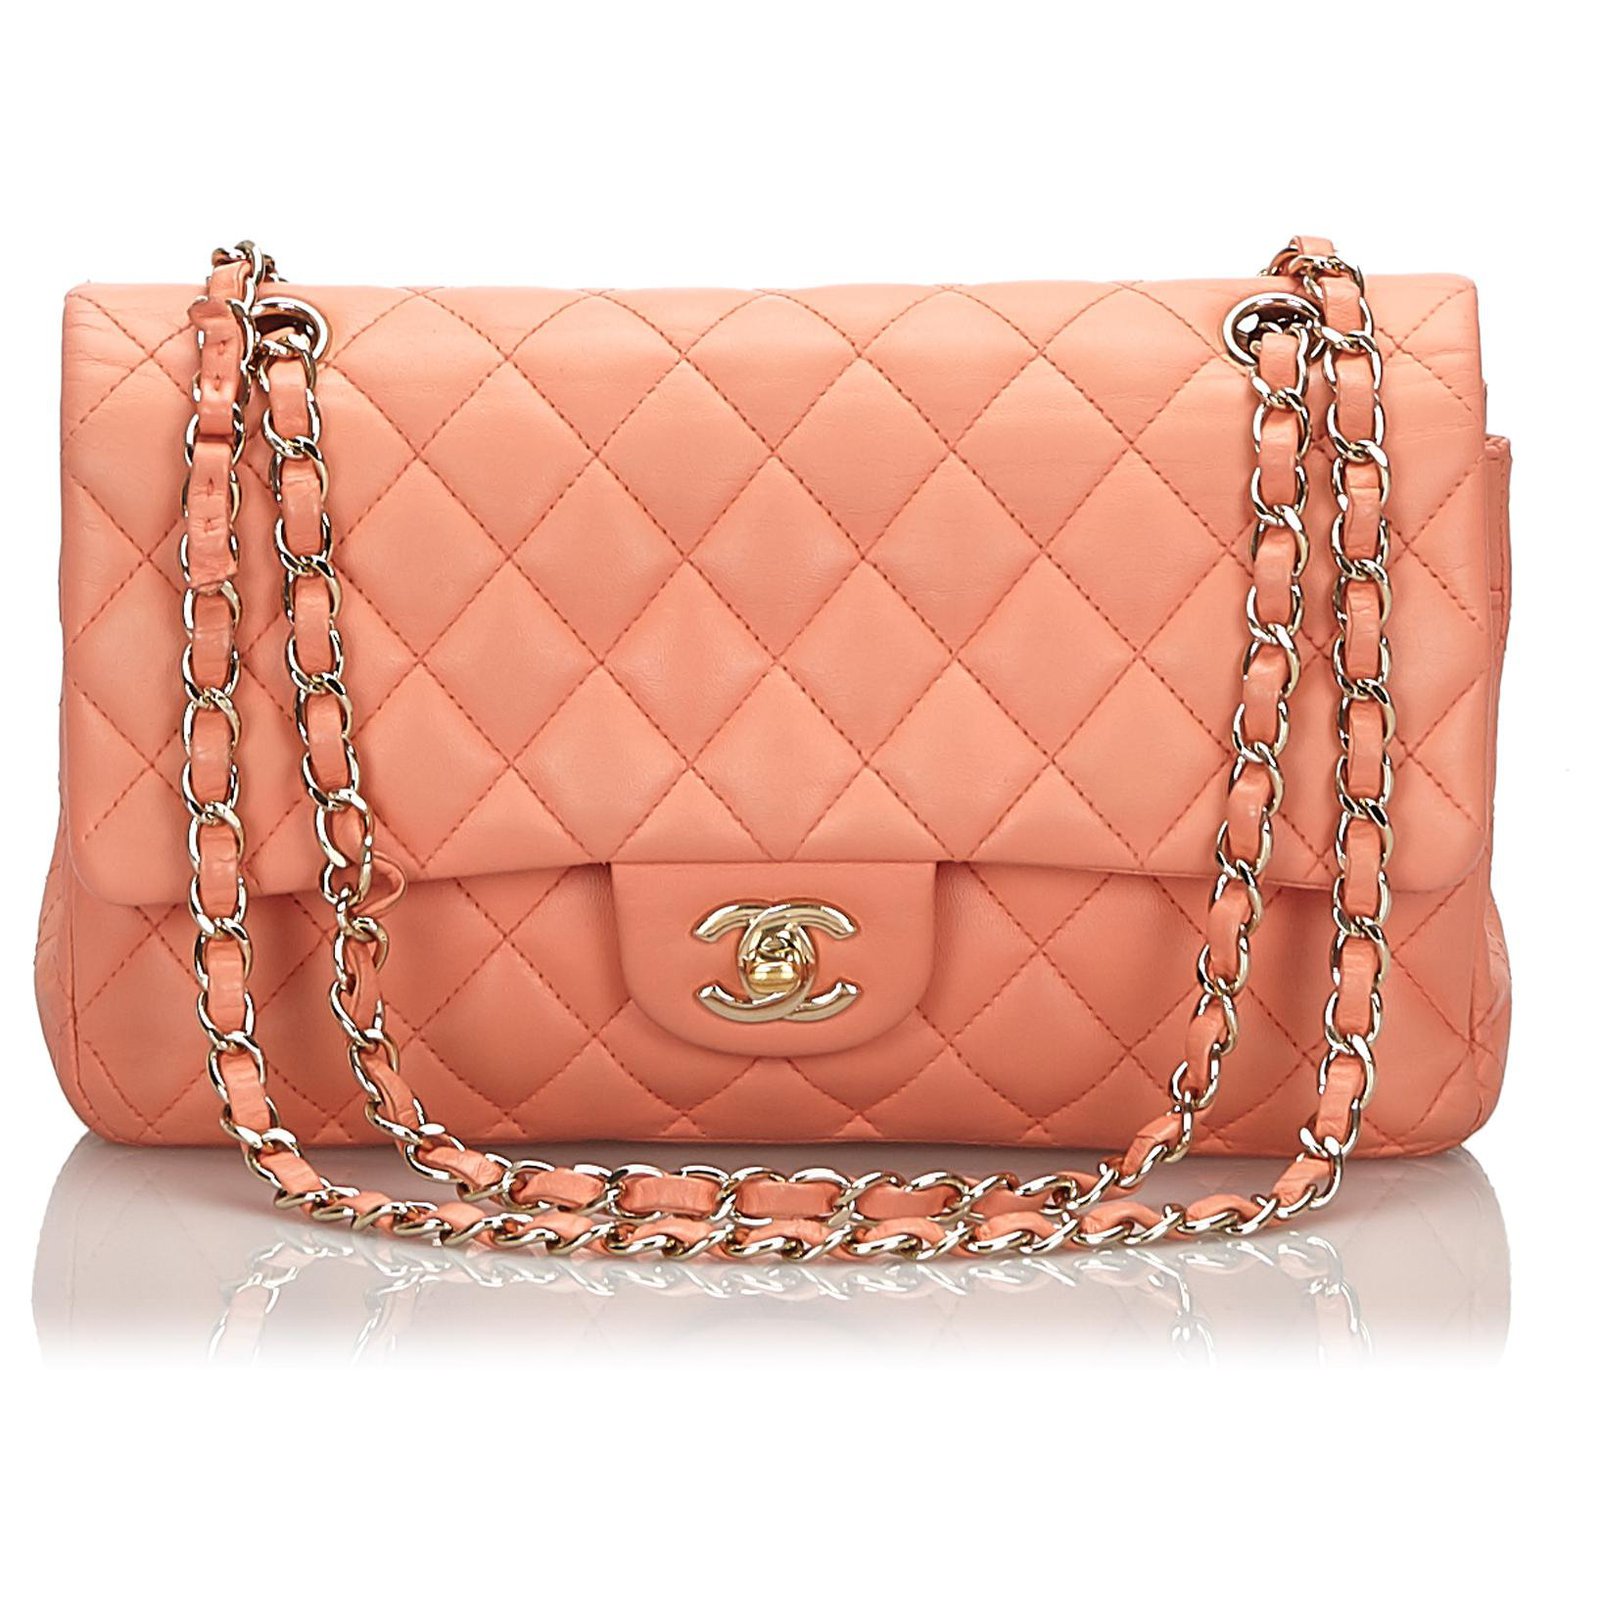 Chanel Orange Handbags